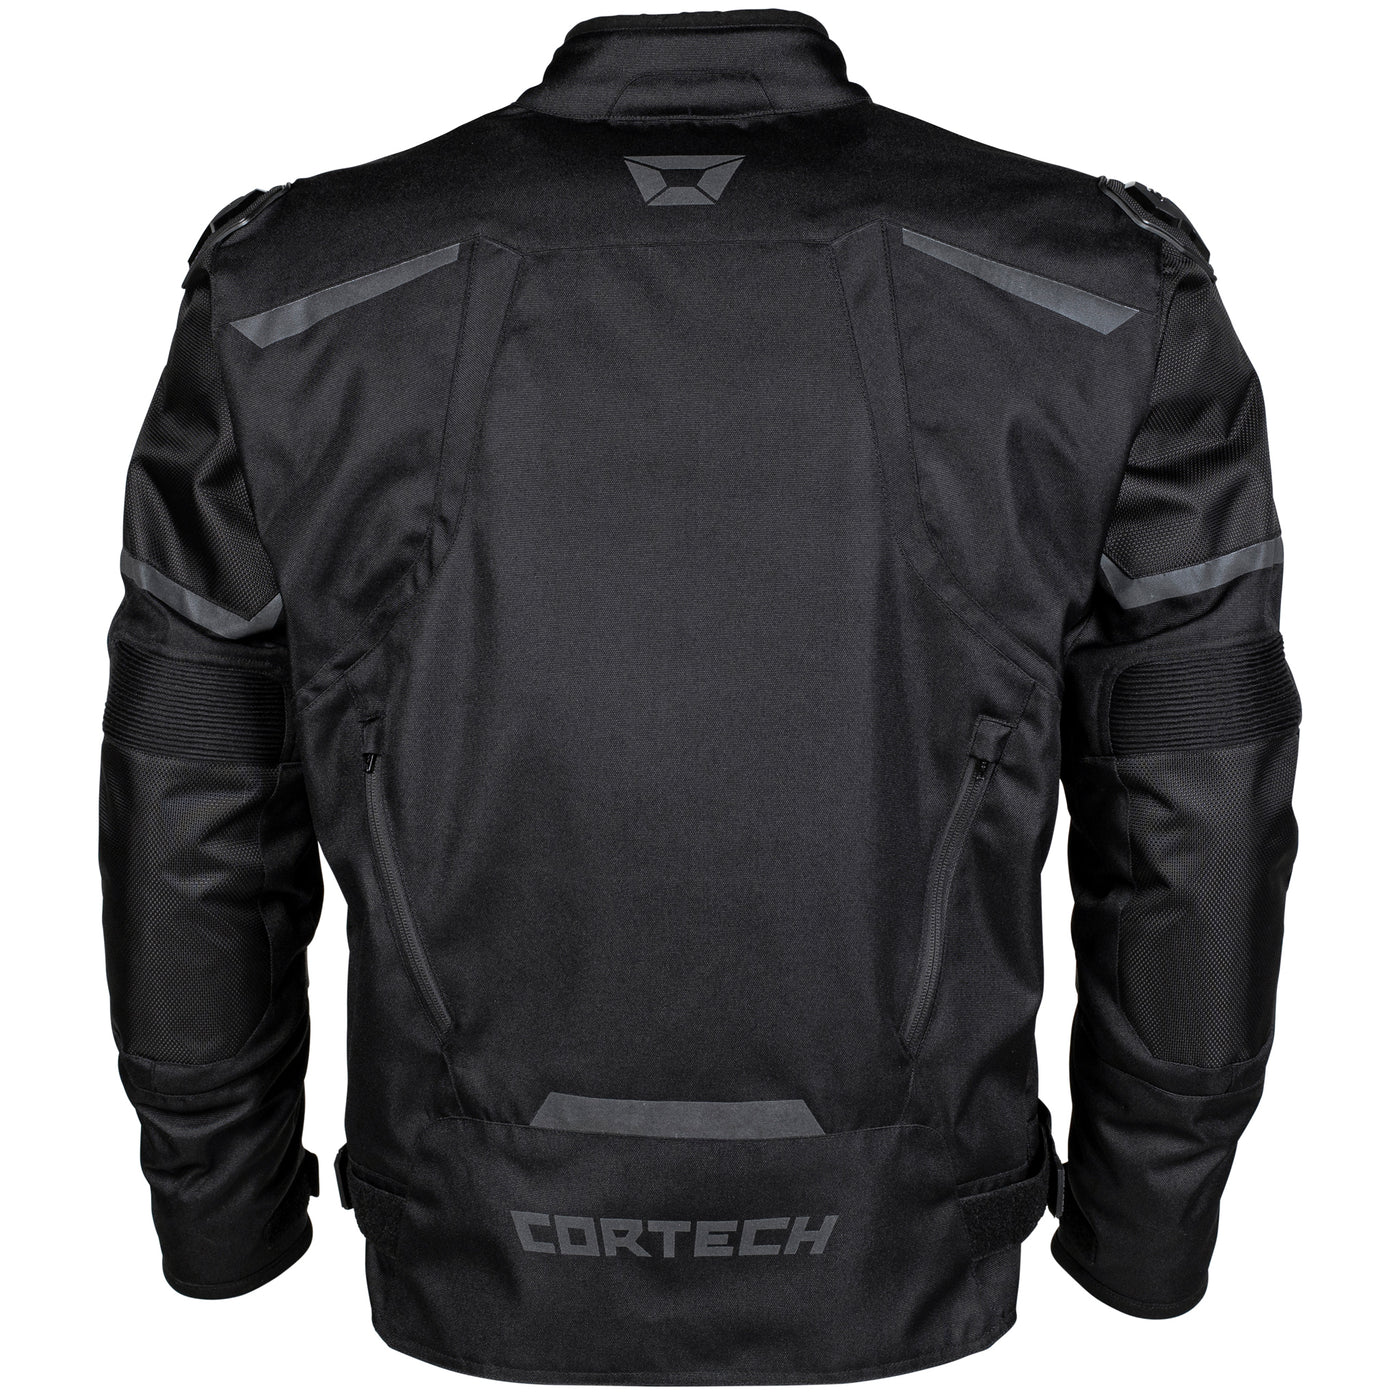 Cortech Speedway Hyper-Tec Jacket